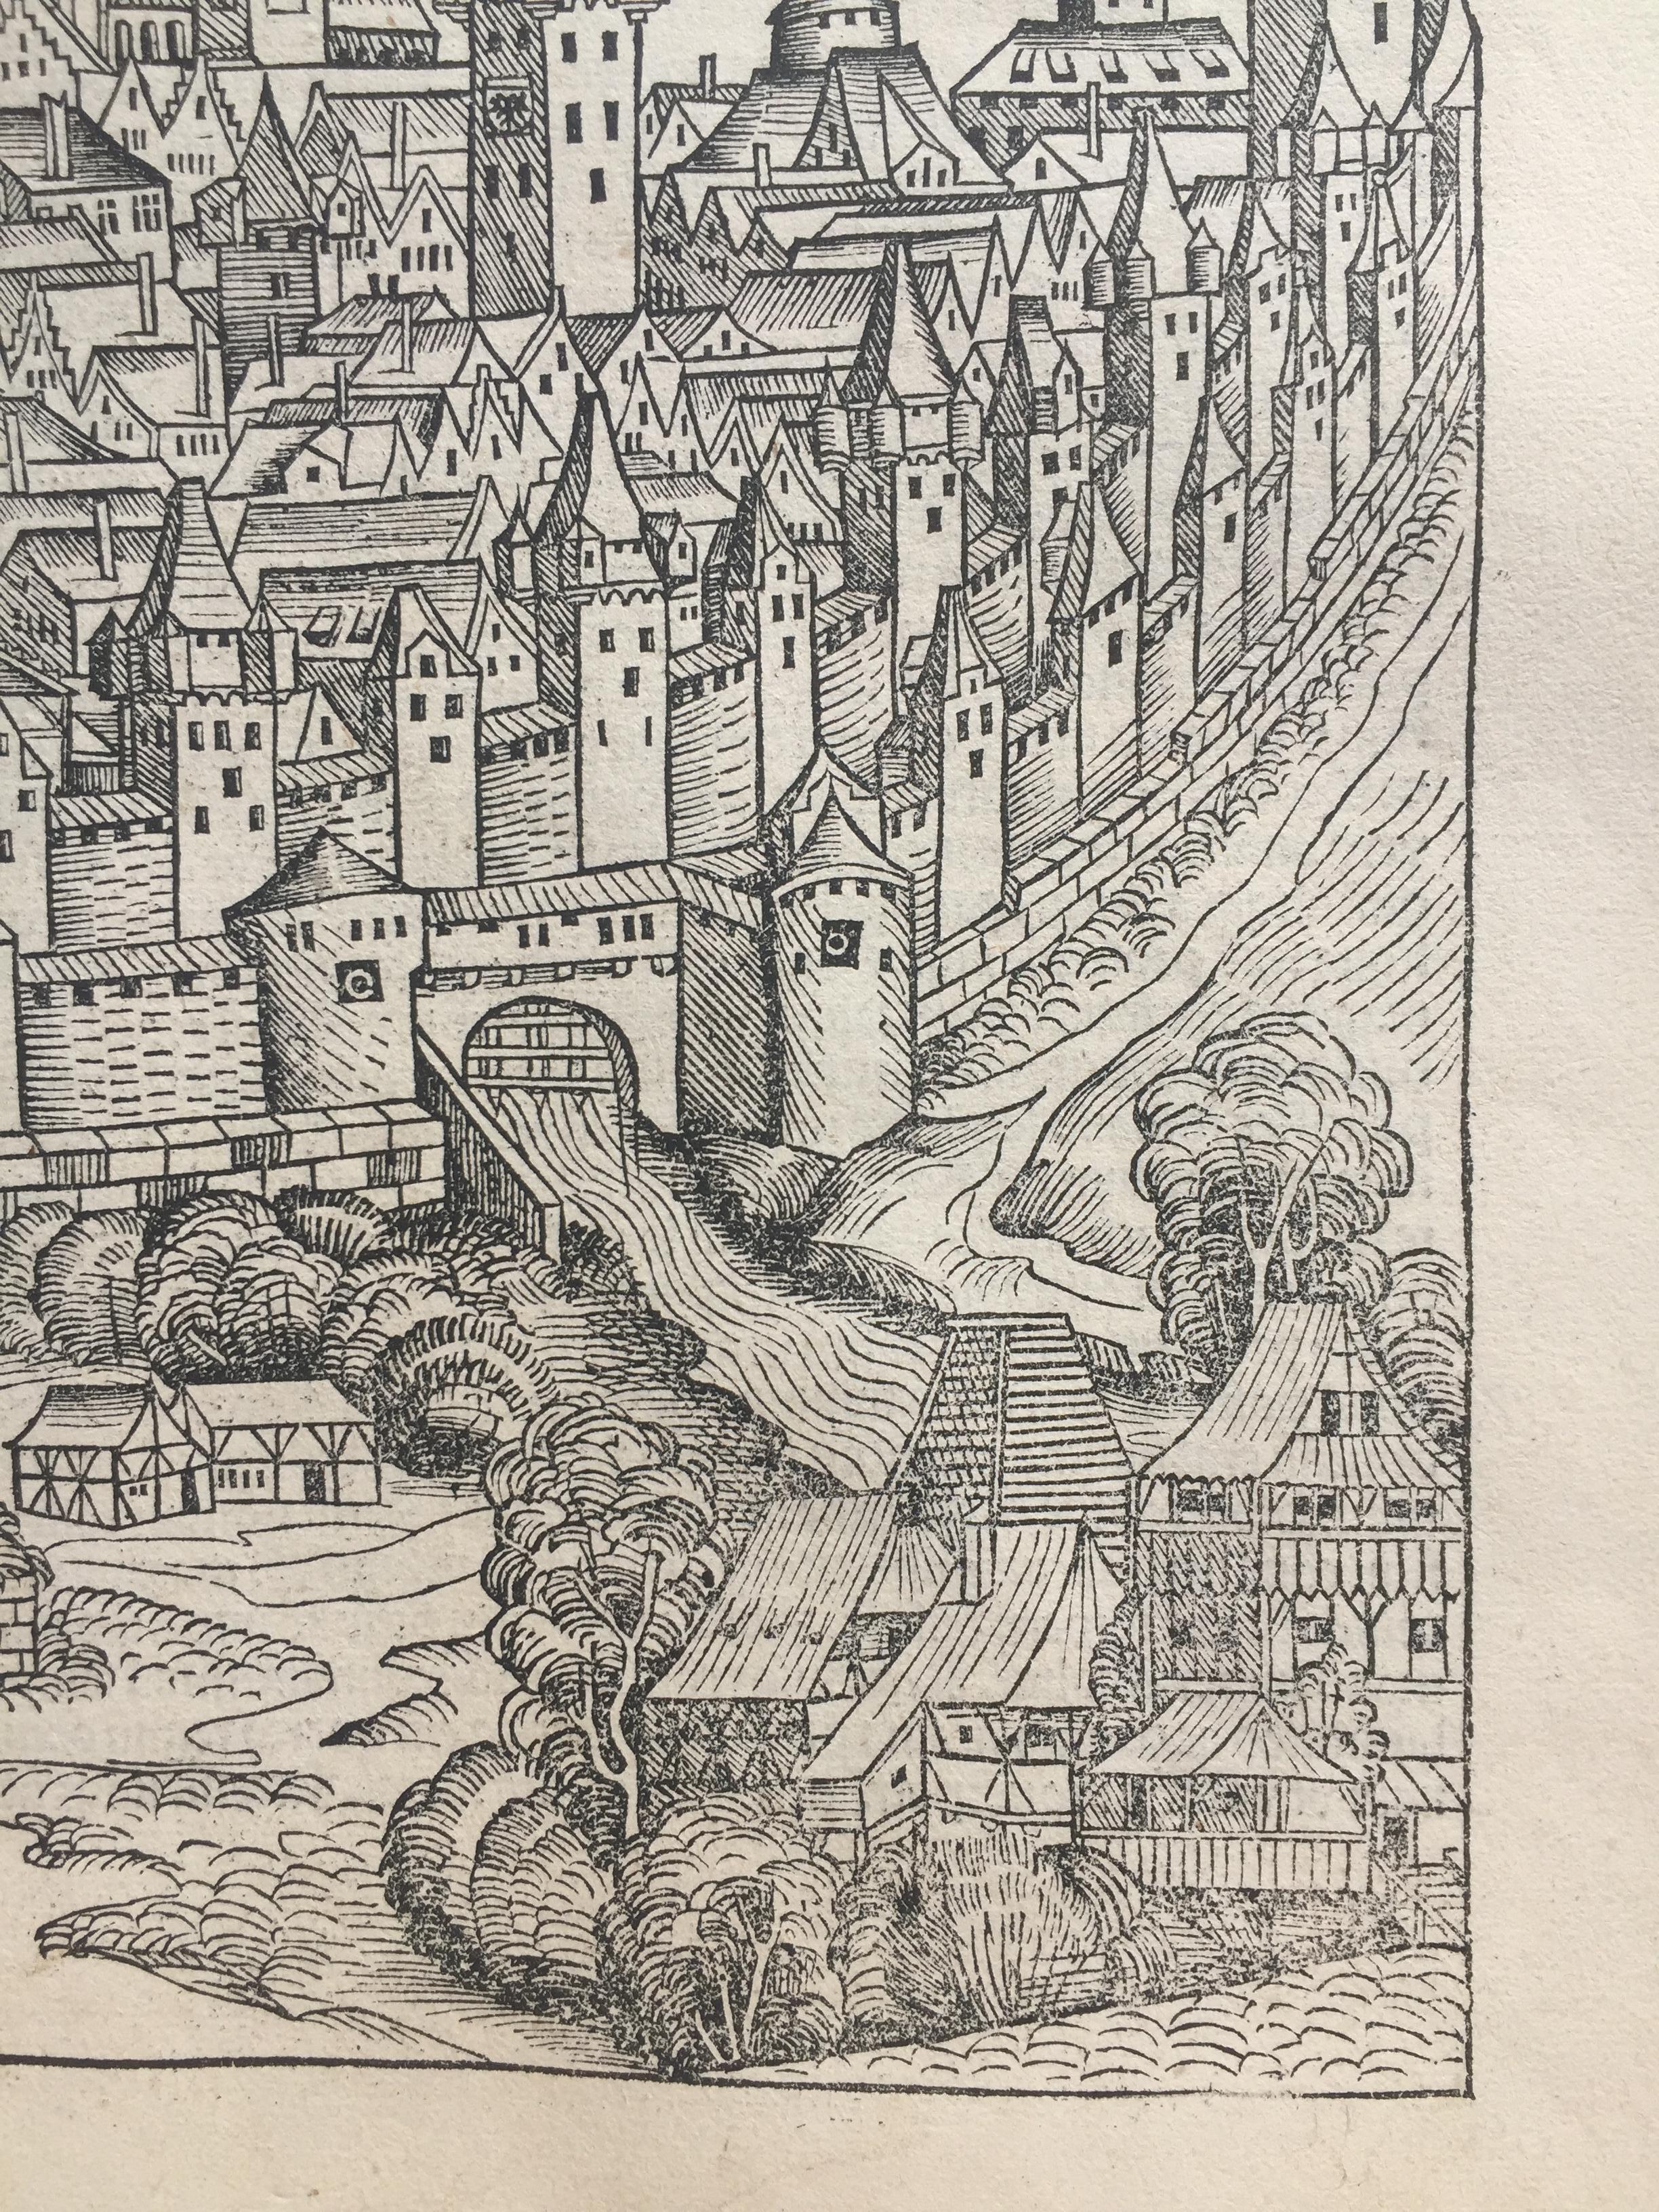 View of Nuremberg from Nuremberg Chronicle - 527 years old 1